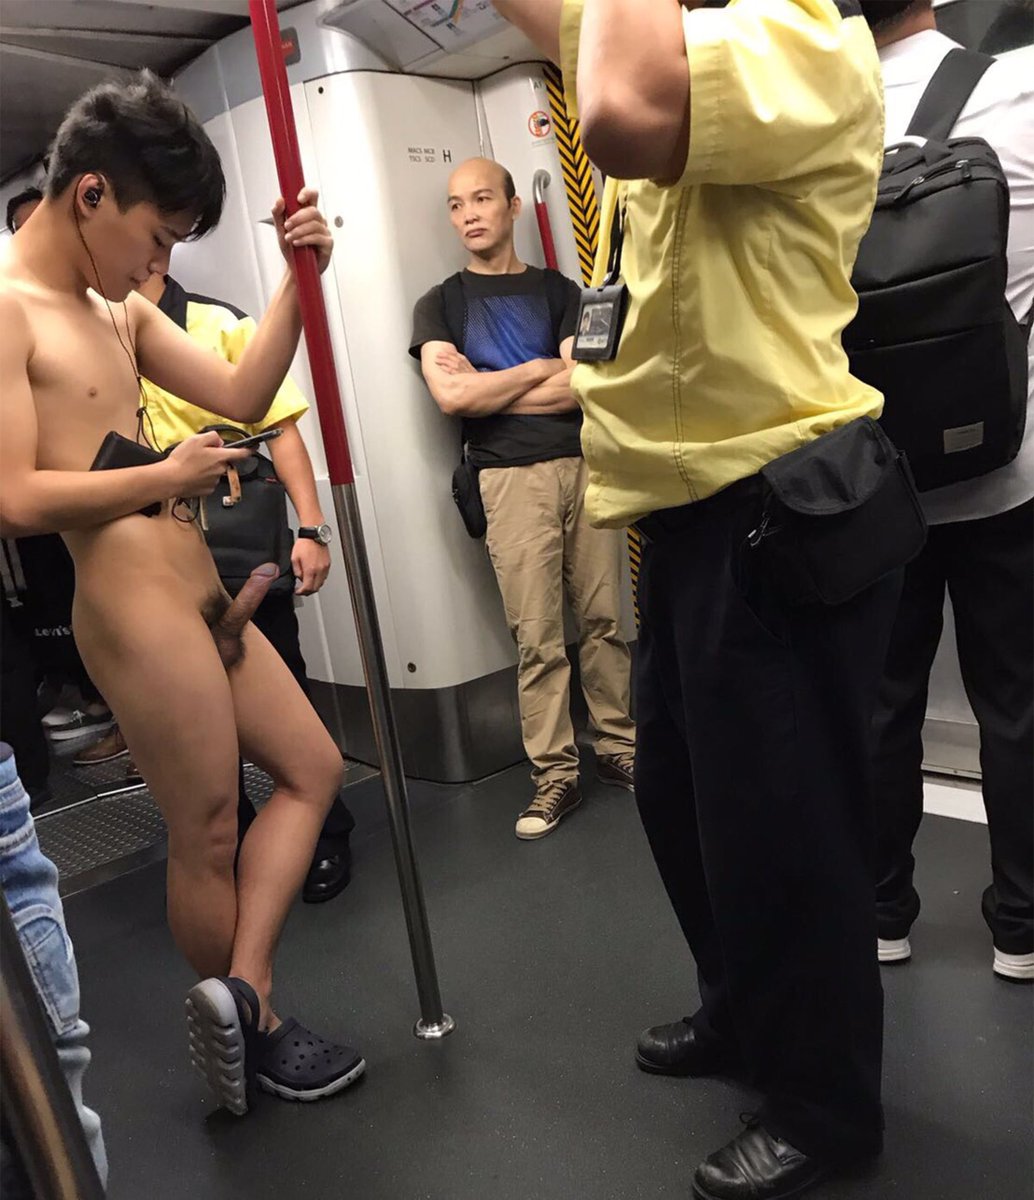 Hot Asian exhibitionist shameless in public